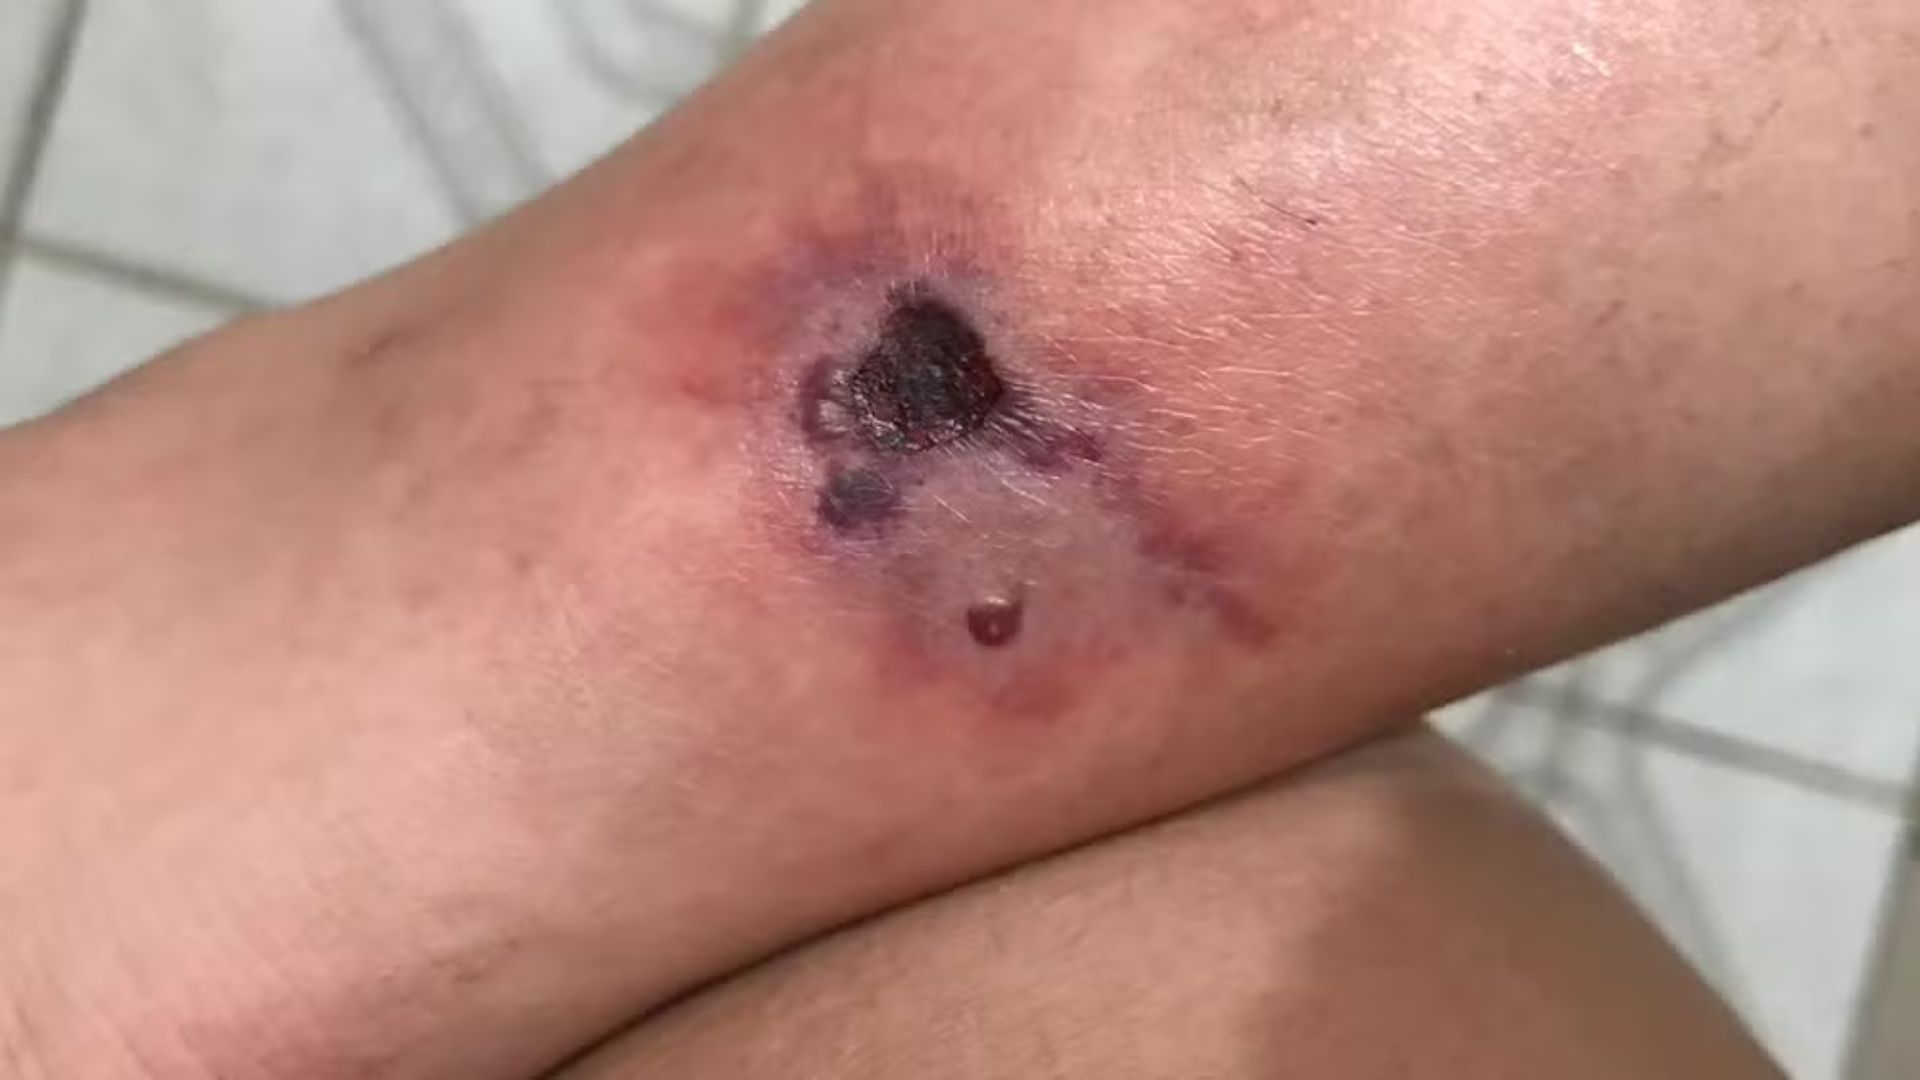 Perna necrosada após picada